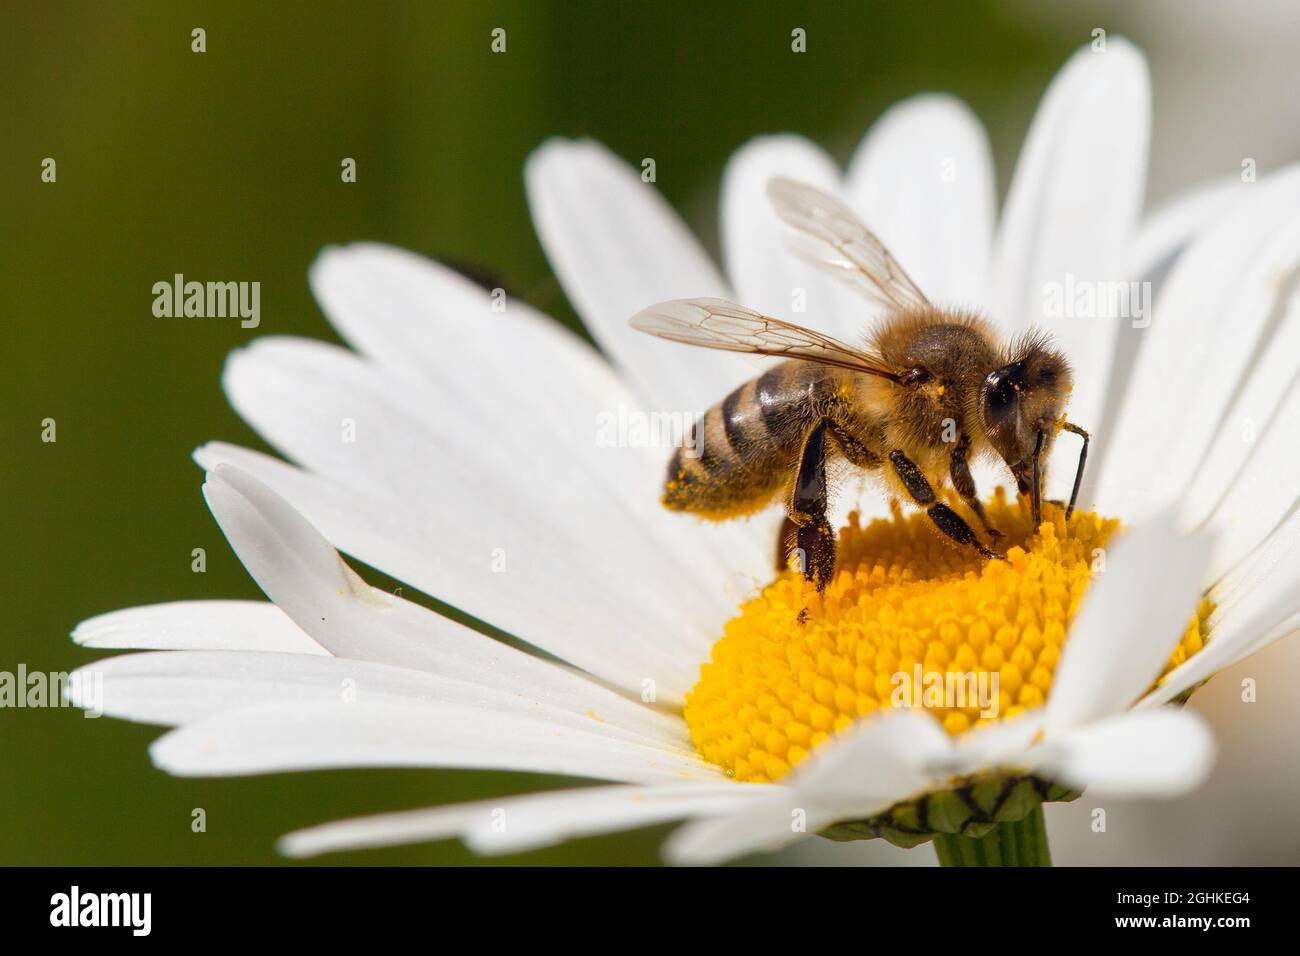 detail of golden bee or honeybee in Latin Apis Mellifera, european or western honey bee sitting on white flower of common  daisy Stock Photo